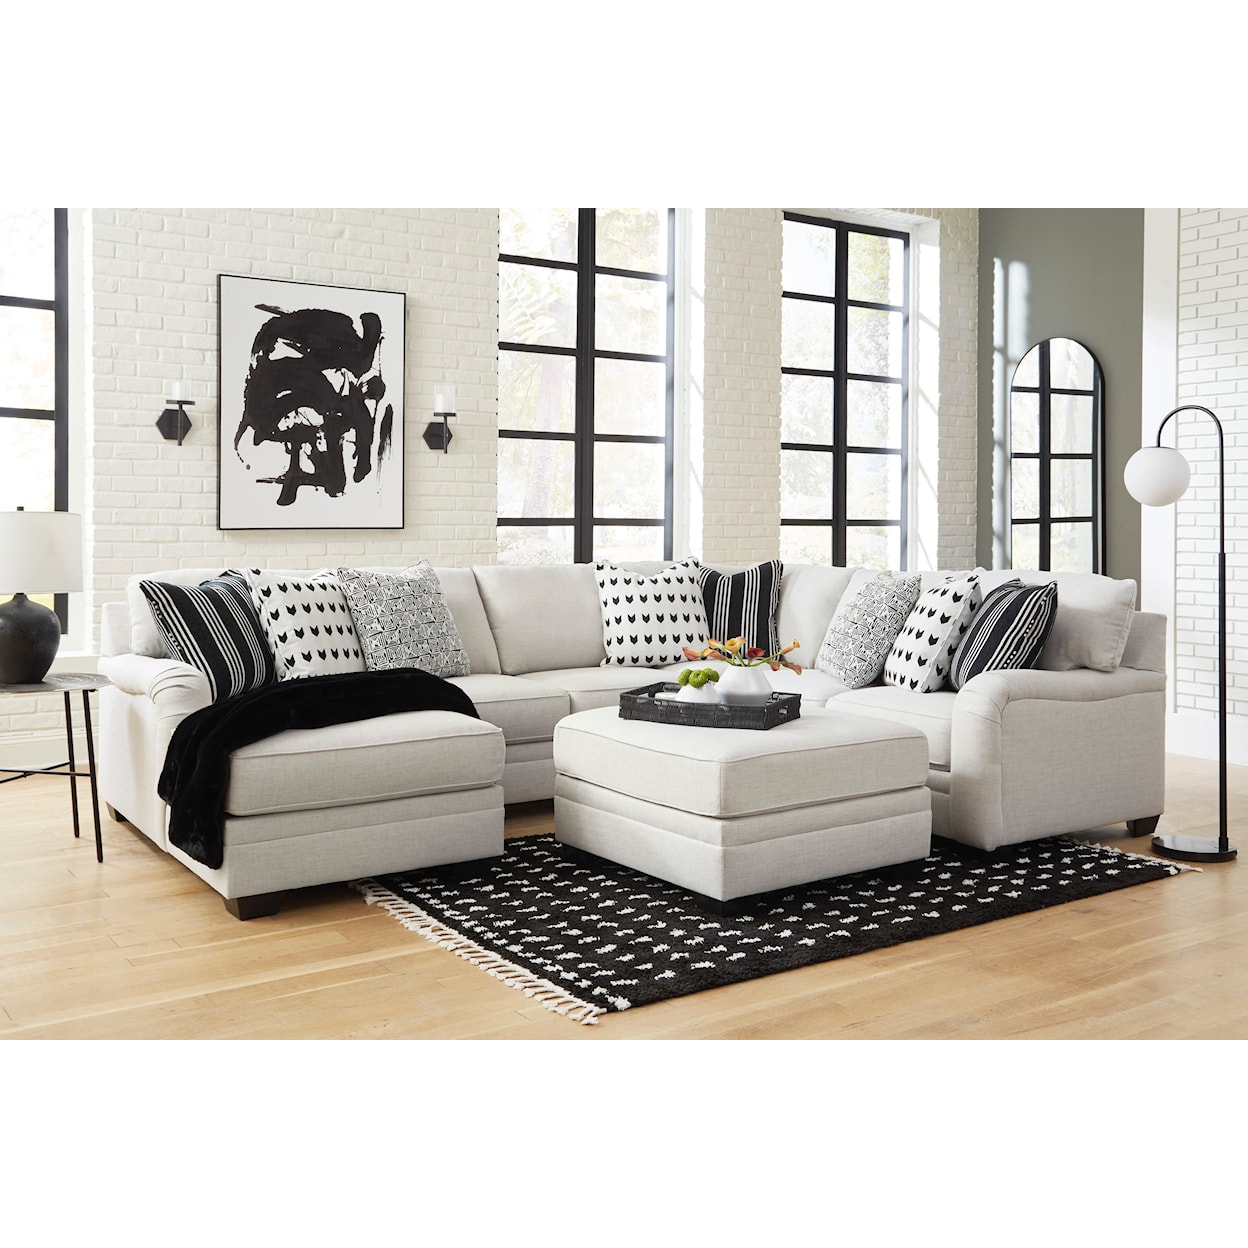 Ashley Furniture Signature Design Huntsworth Living Room Set